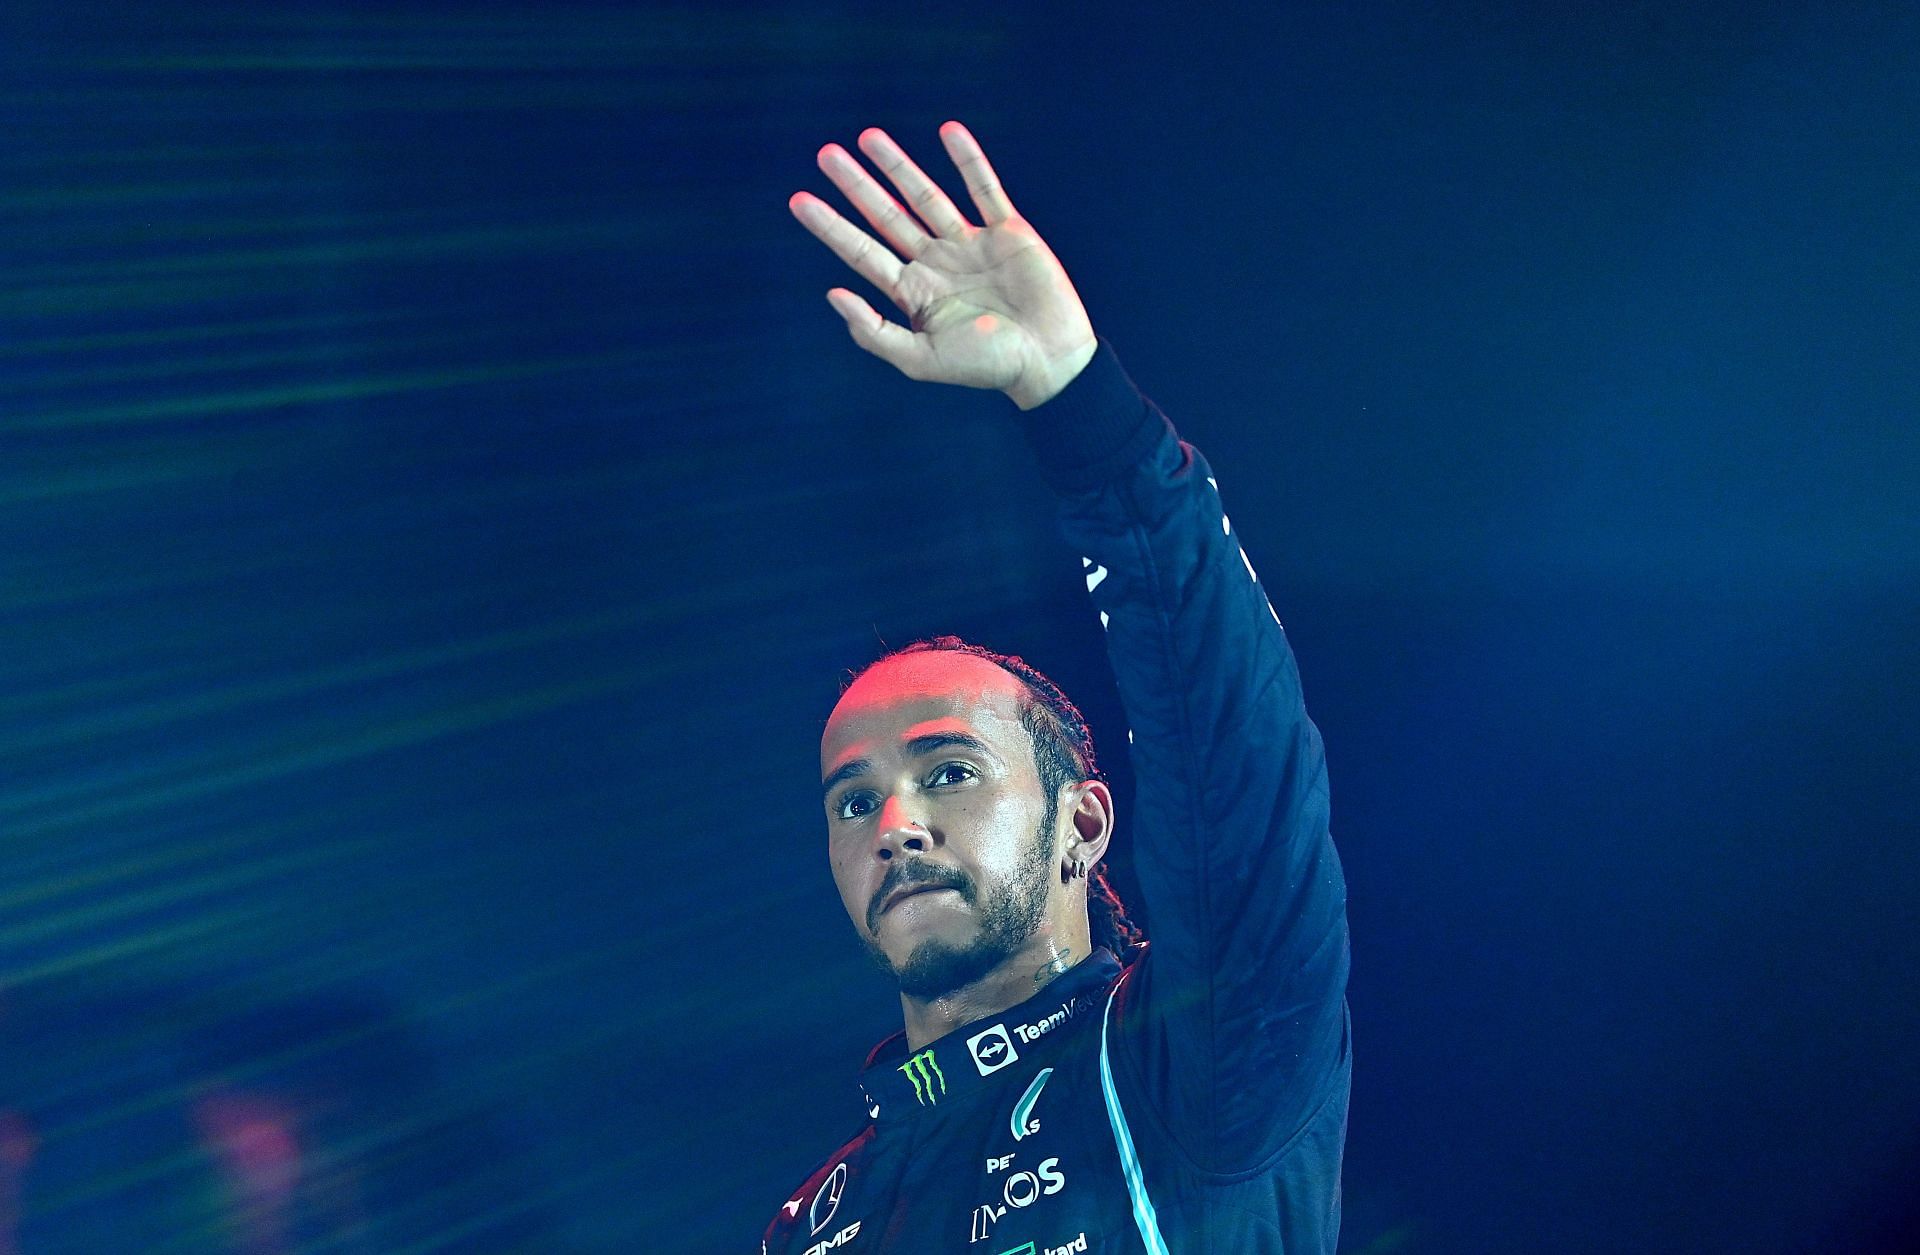 F1 Grand Prix of Saudi Arabia - Lewis Hamilton won the inaugural race.